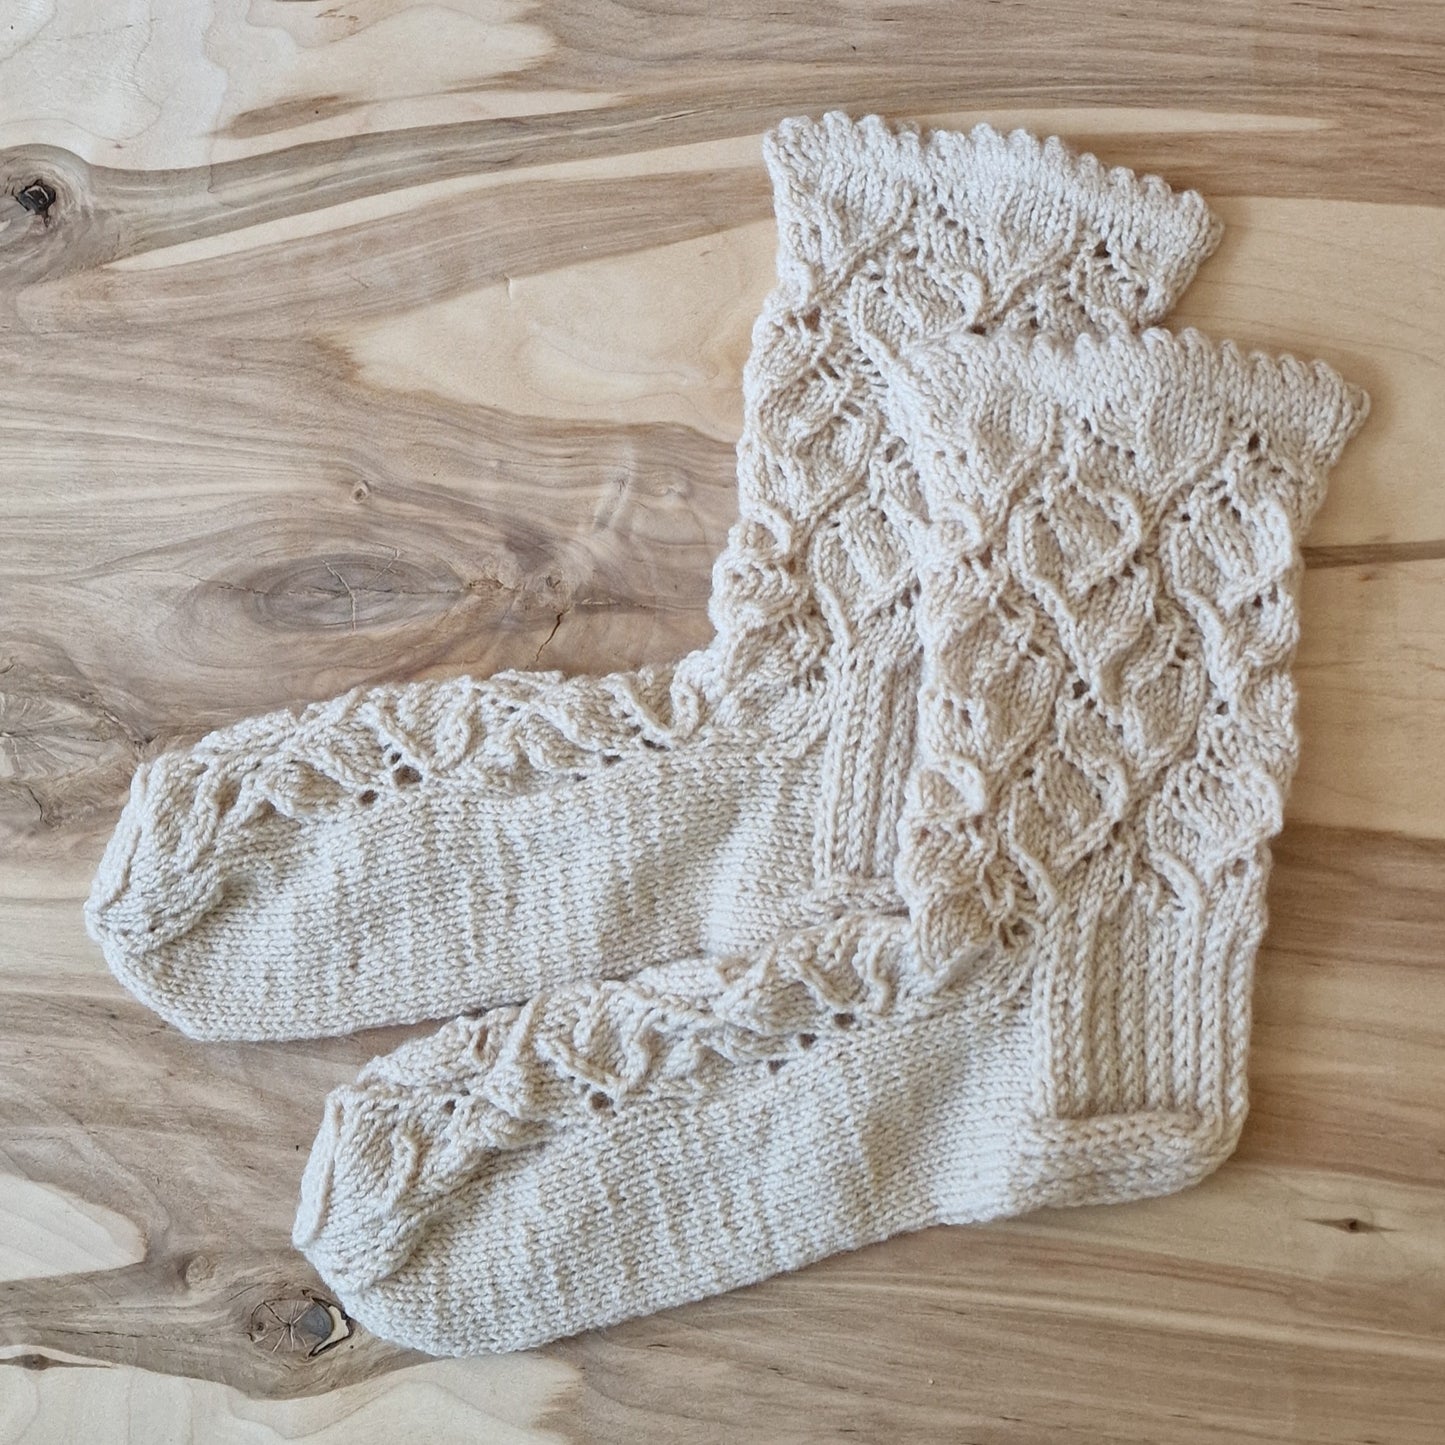 Light sand colored lace knit warm socks 36-38 size (SITE 15)